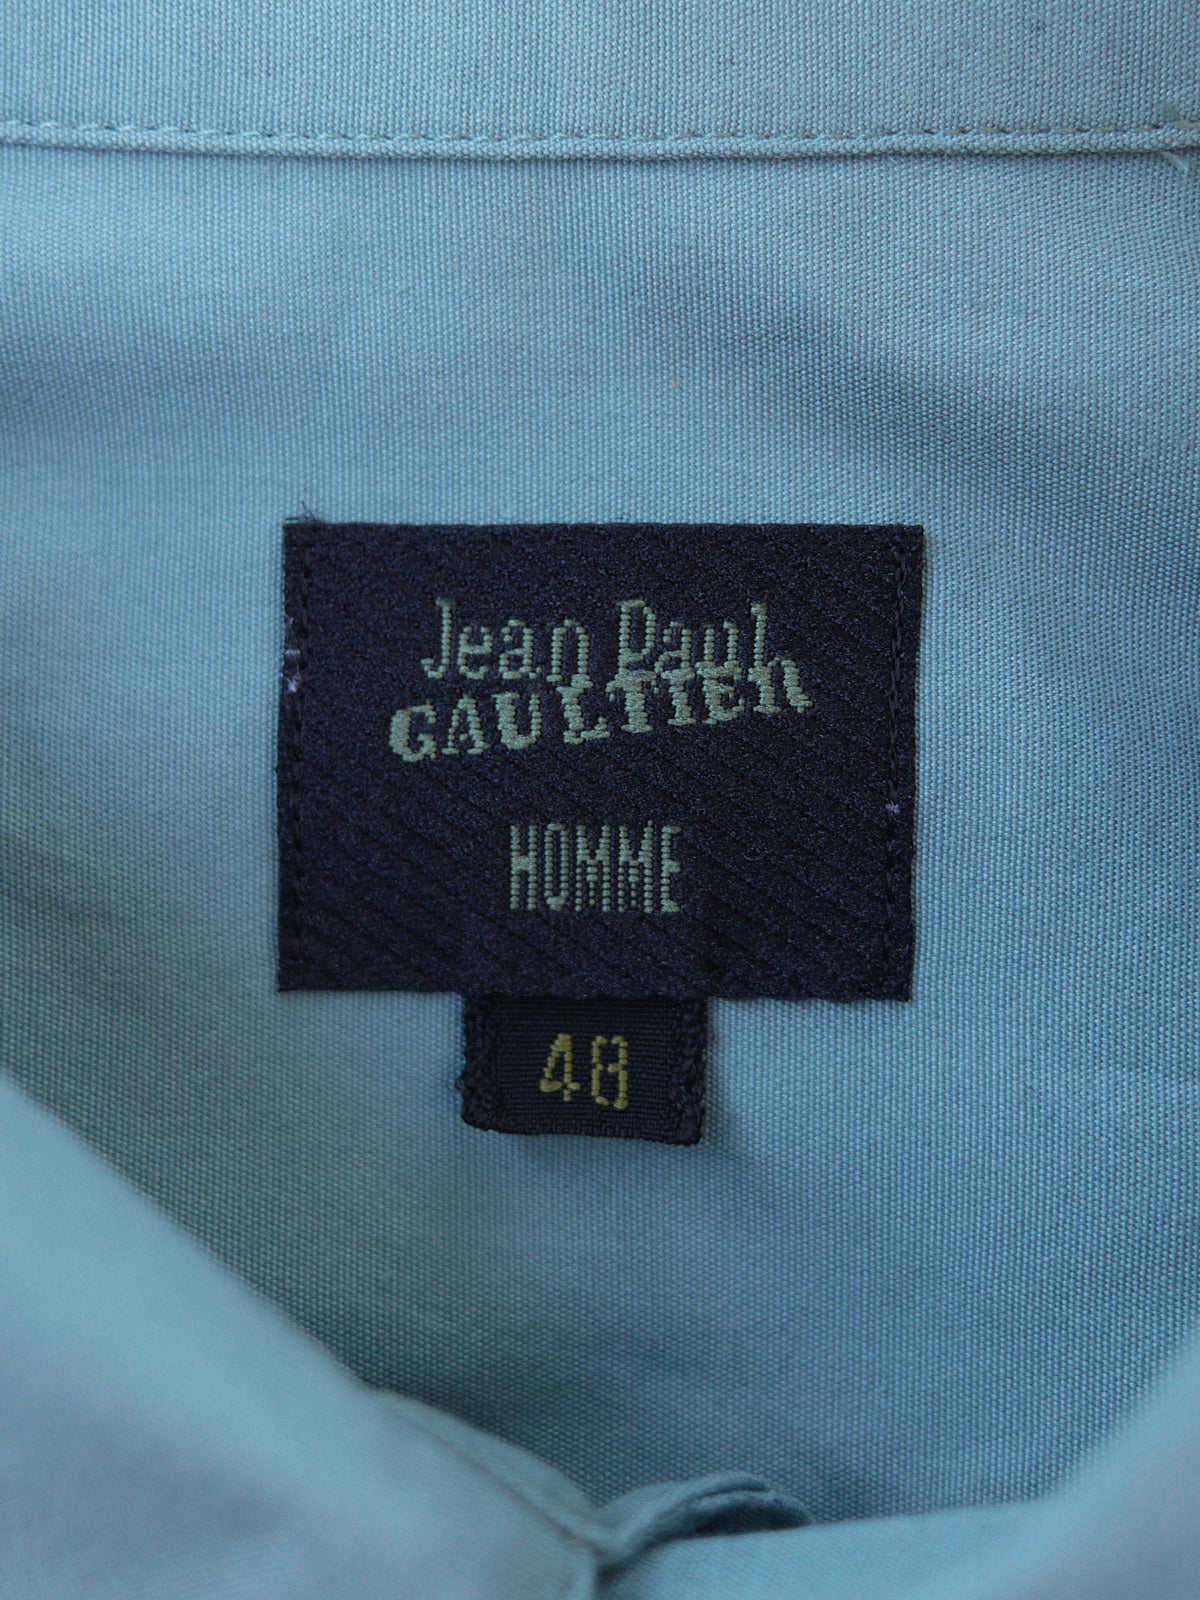 jean paul gaultier homme teal cotton triple pocket shirt